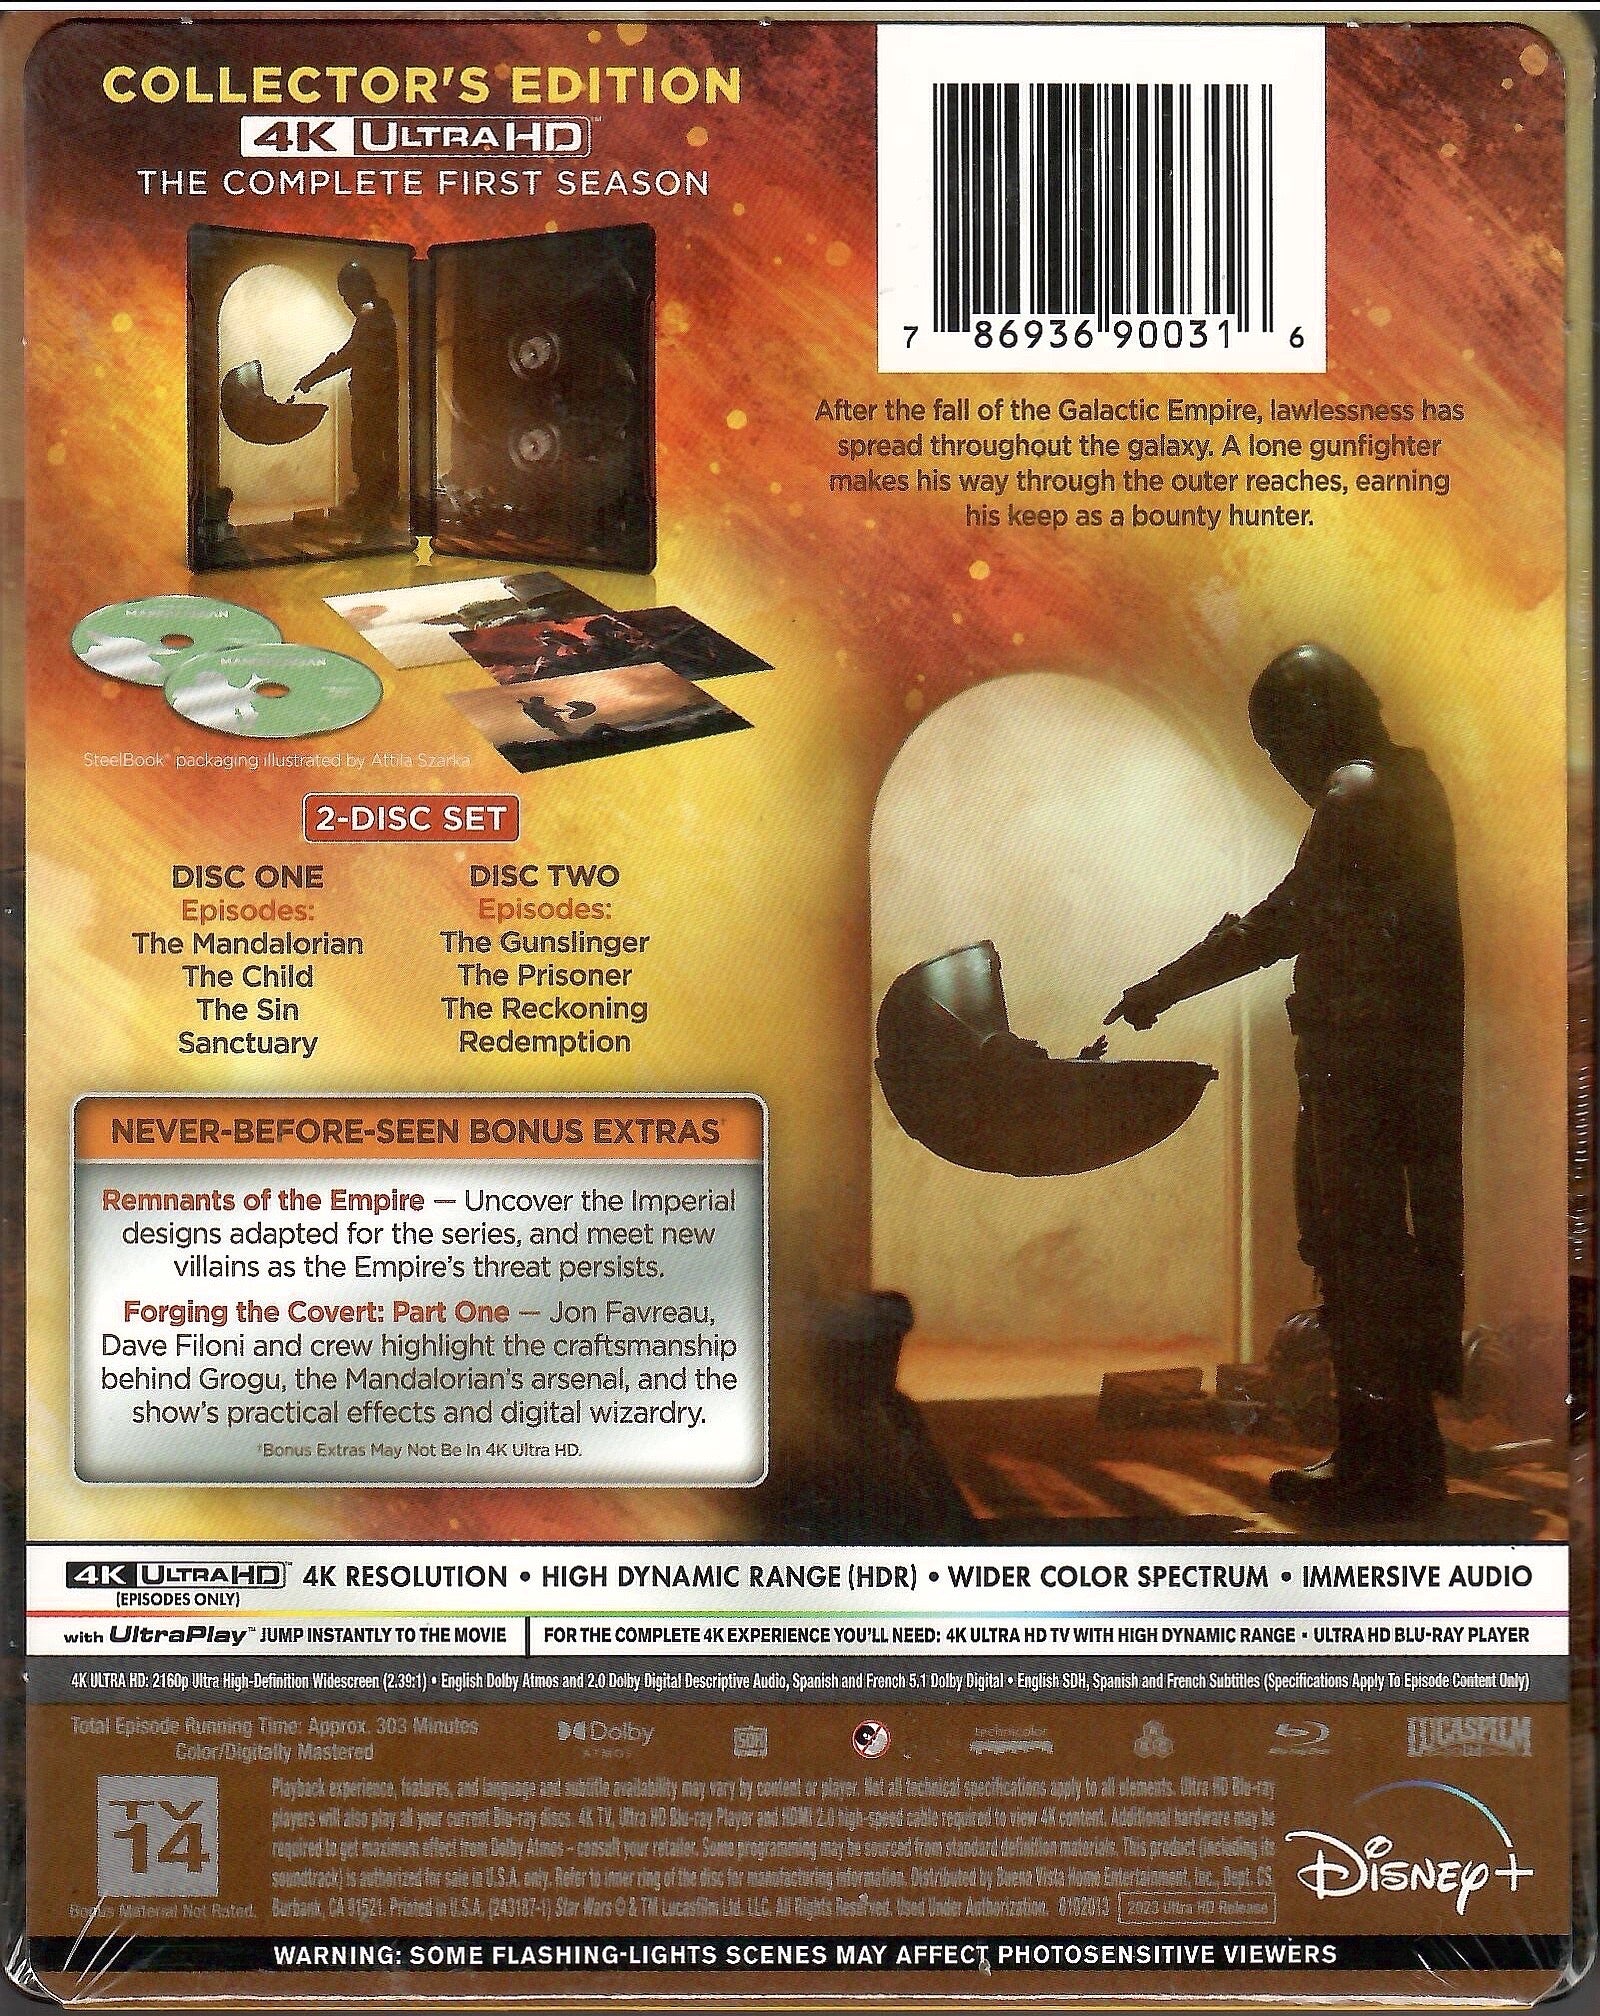 The Mandalorian Season 1 4K UHD Blu-ray Steelbook Available Now - Jedi News